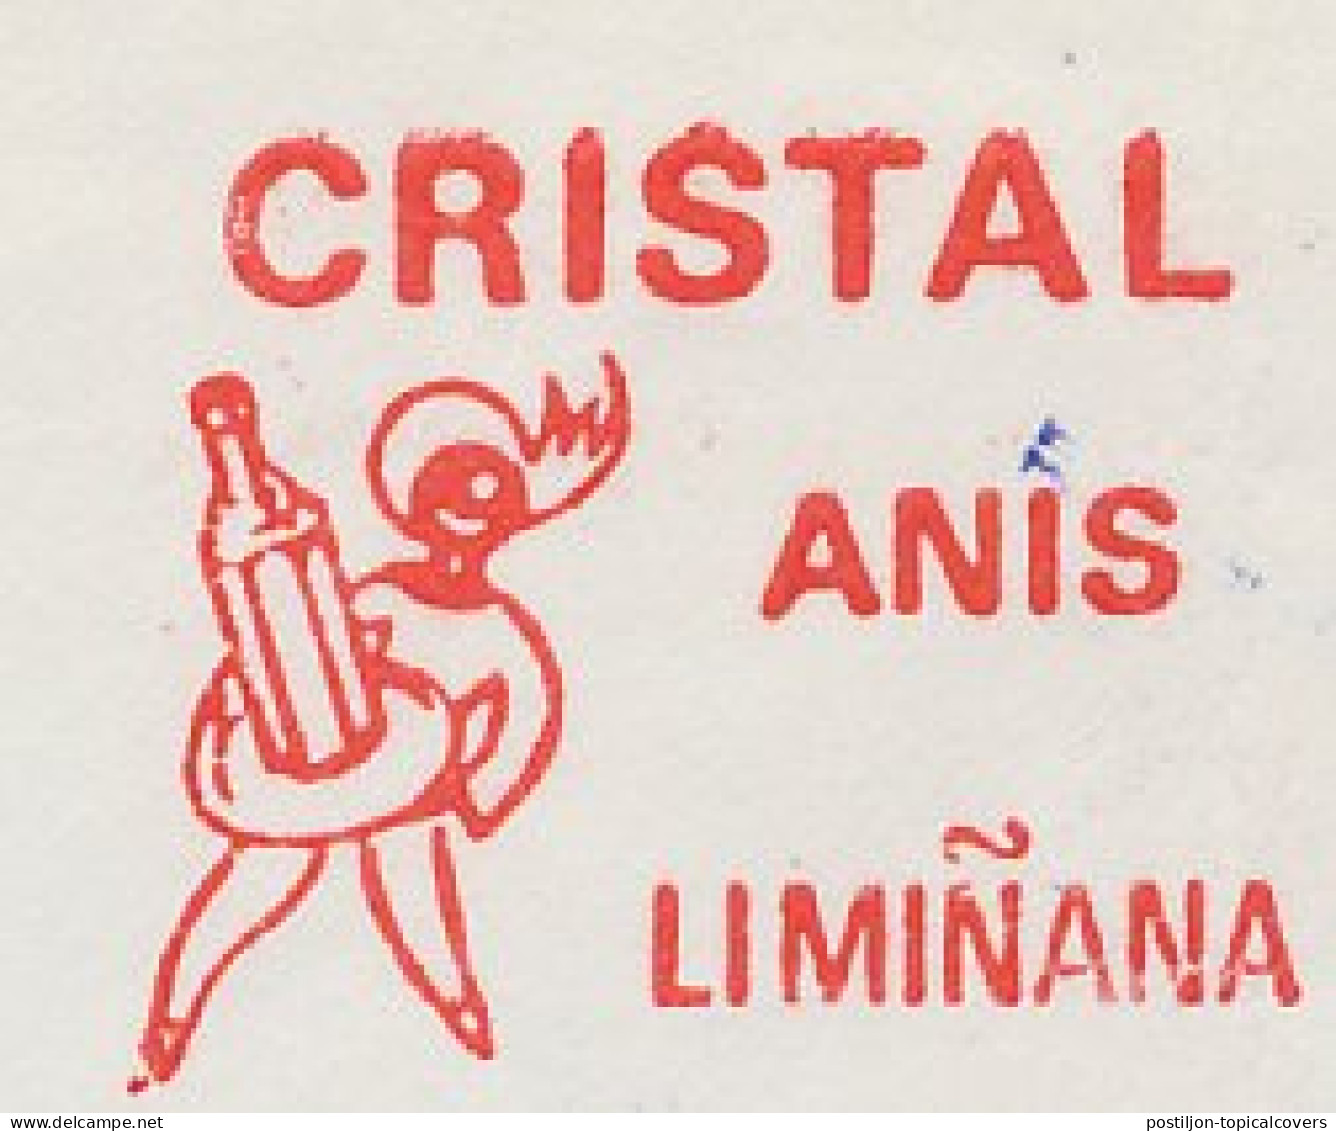 Meter Cut France 1964 Aperitif - Liqueur - Cristal Anis - Wijn & Sterke Drank